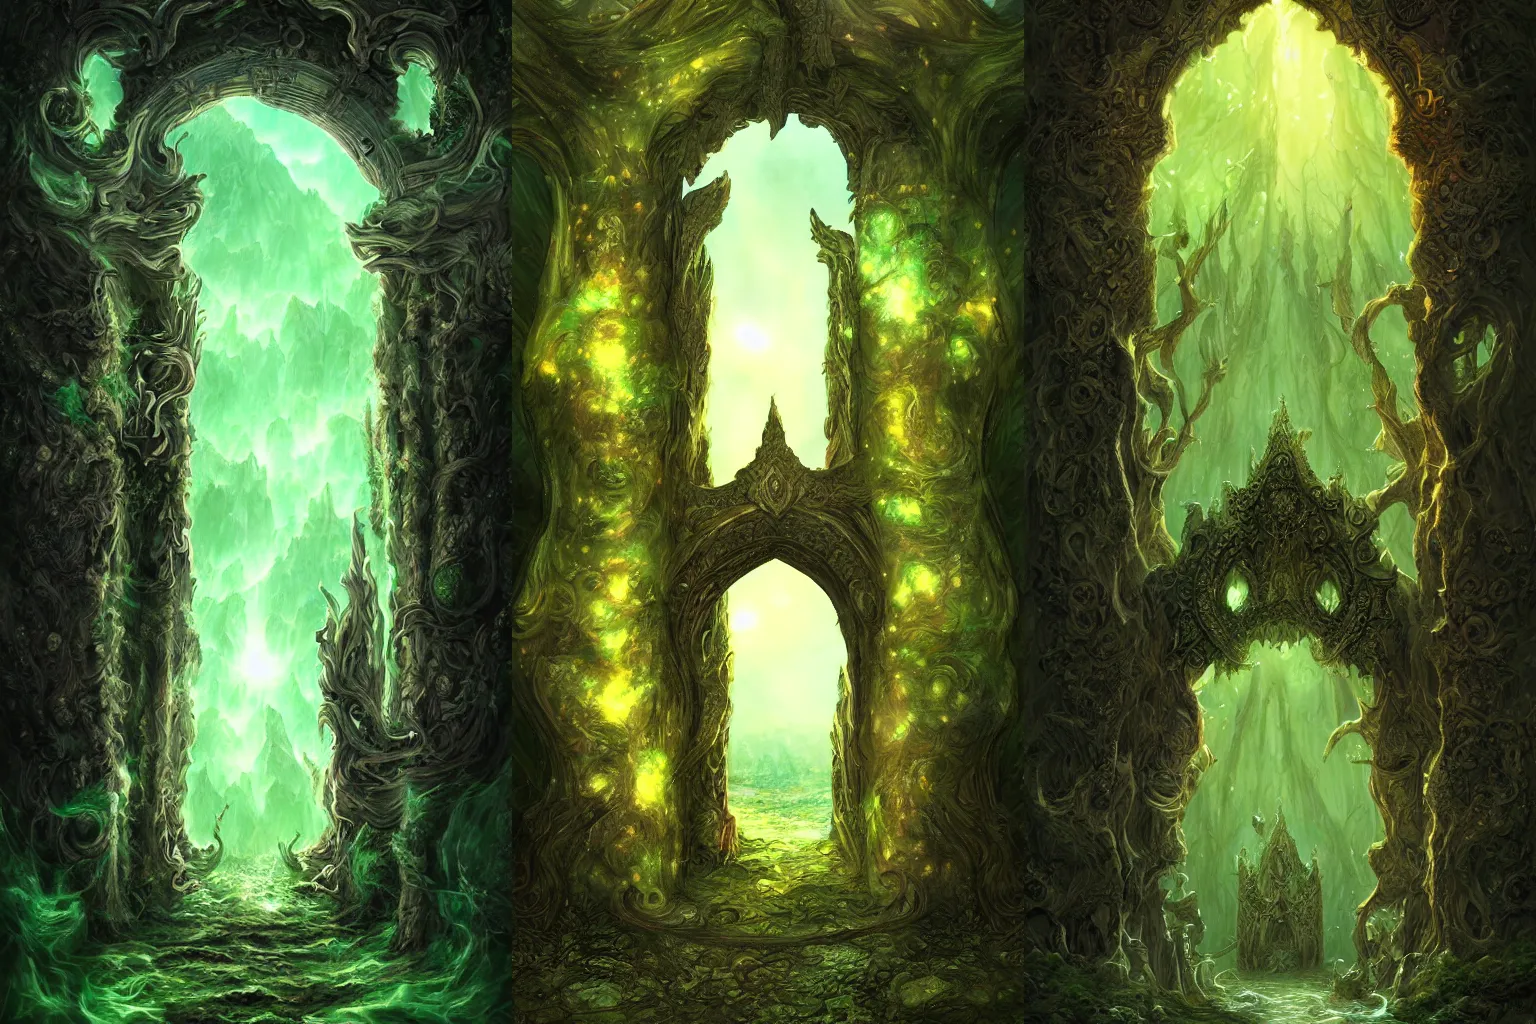 Prompt: The gate to the eternal kingdom of algae, fantasy, digital art, HD, detailed.